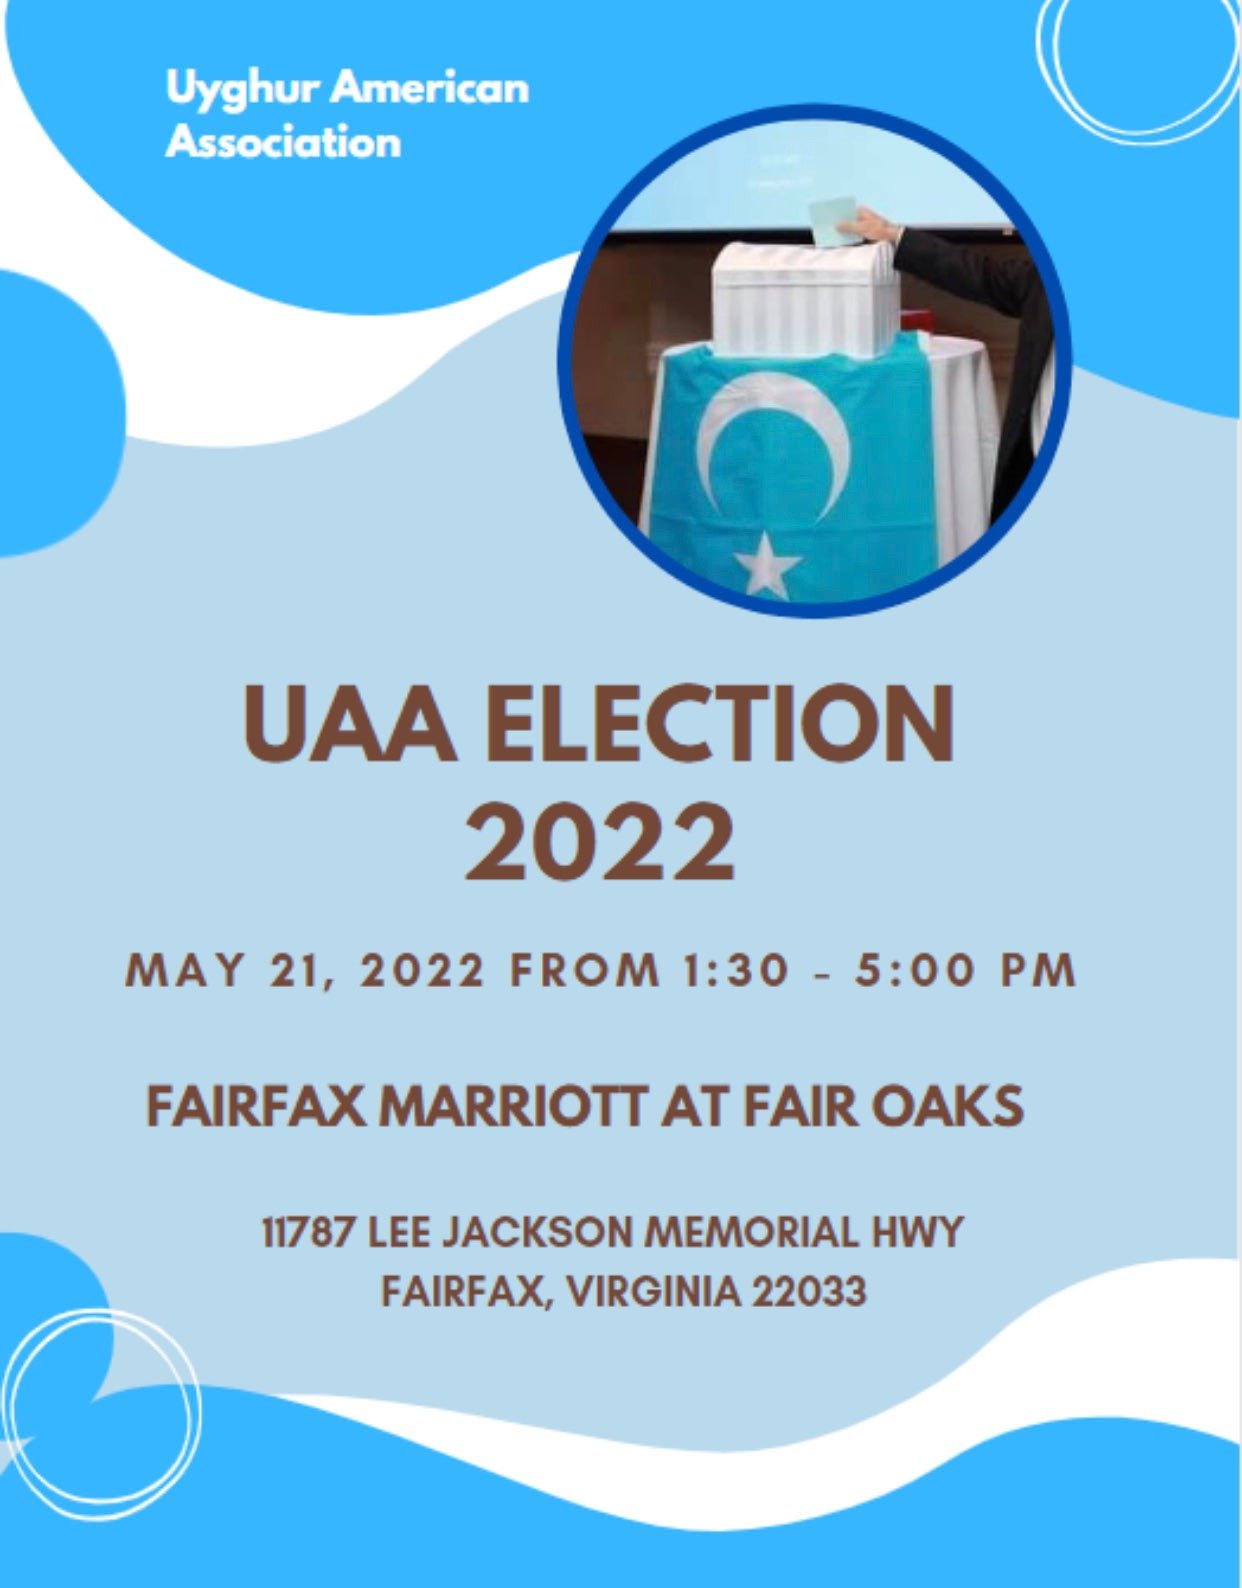 UAA Election 2022 — Uyghur American Association